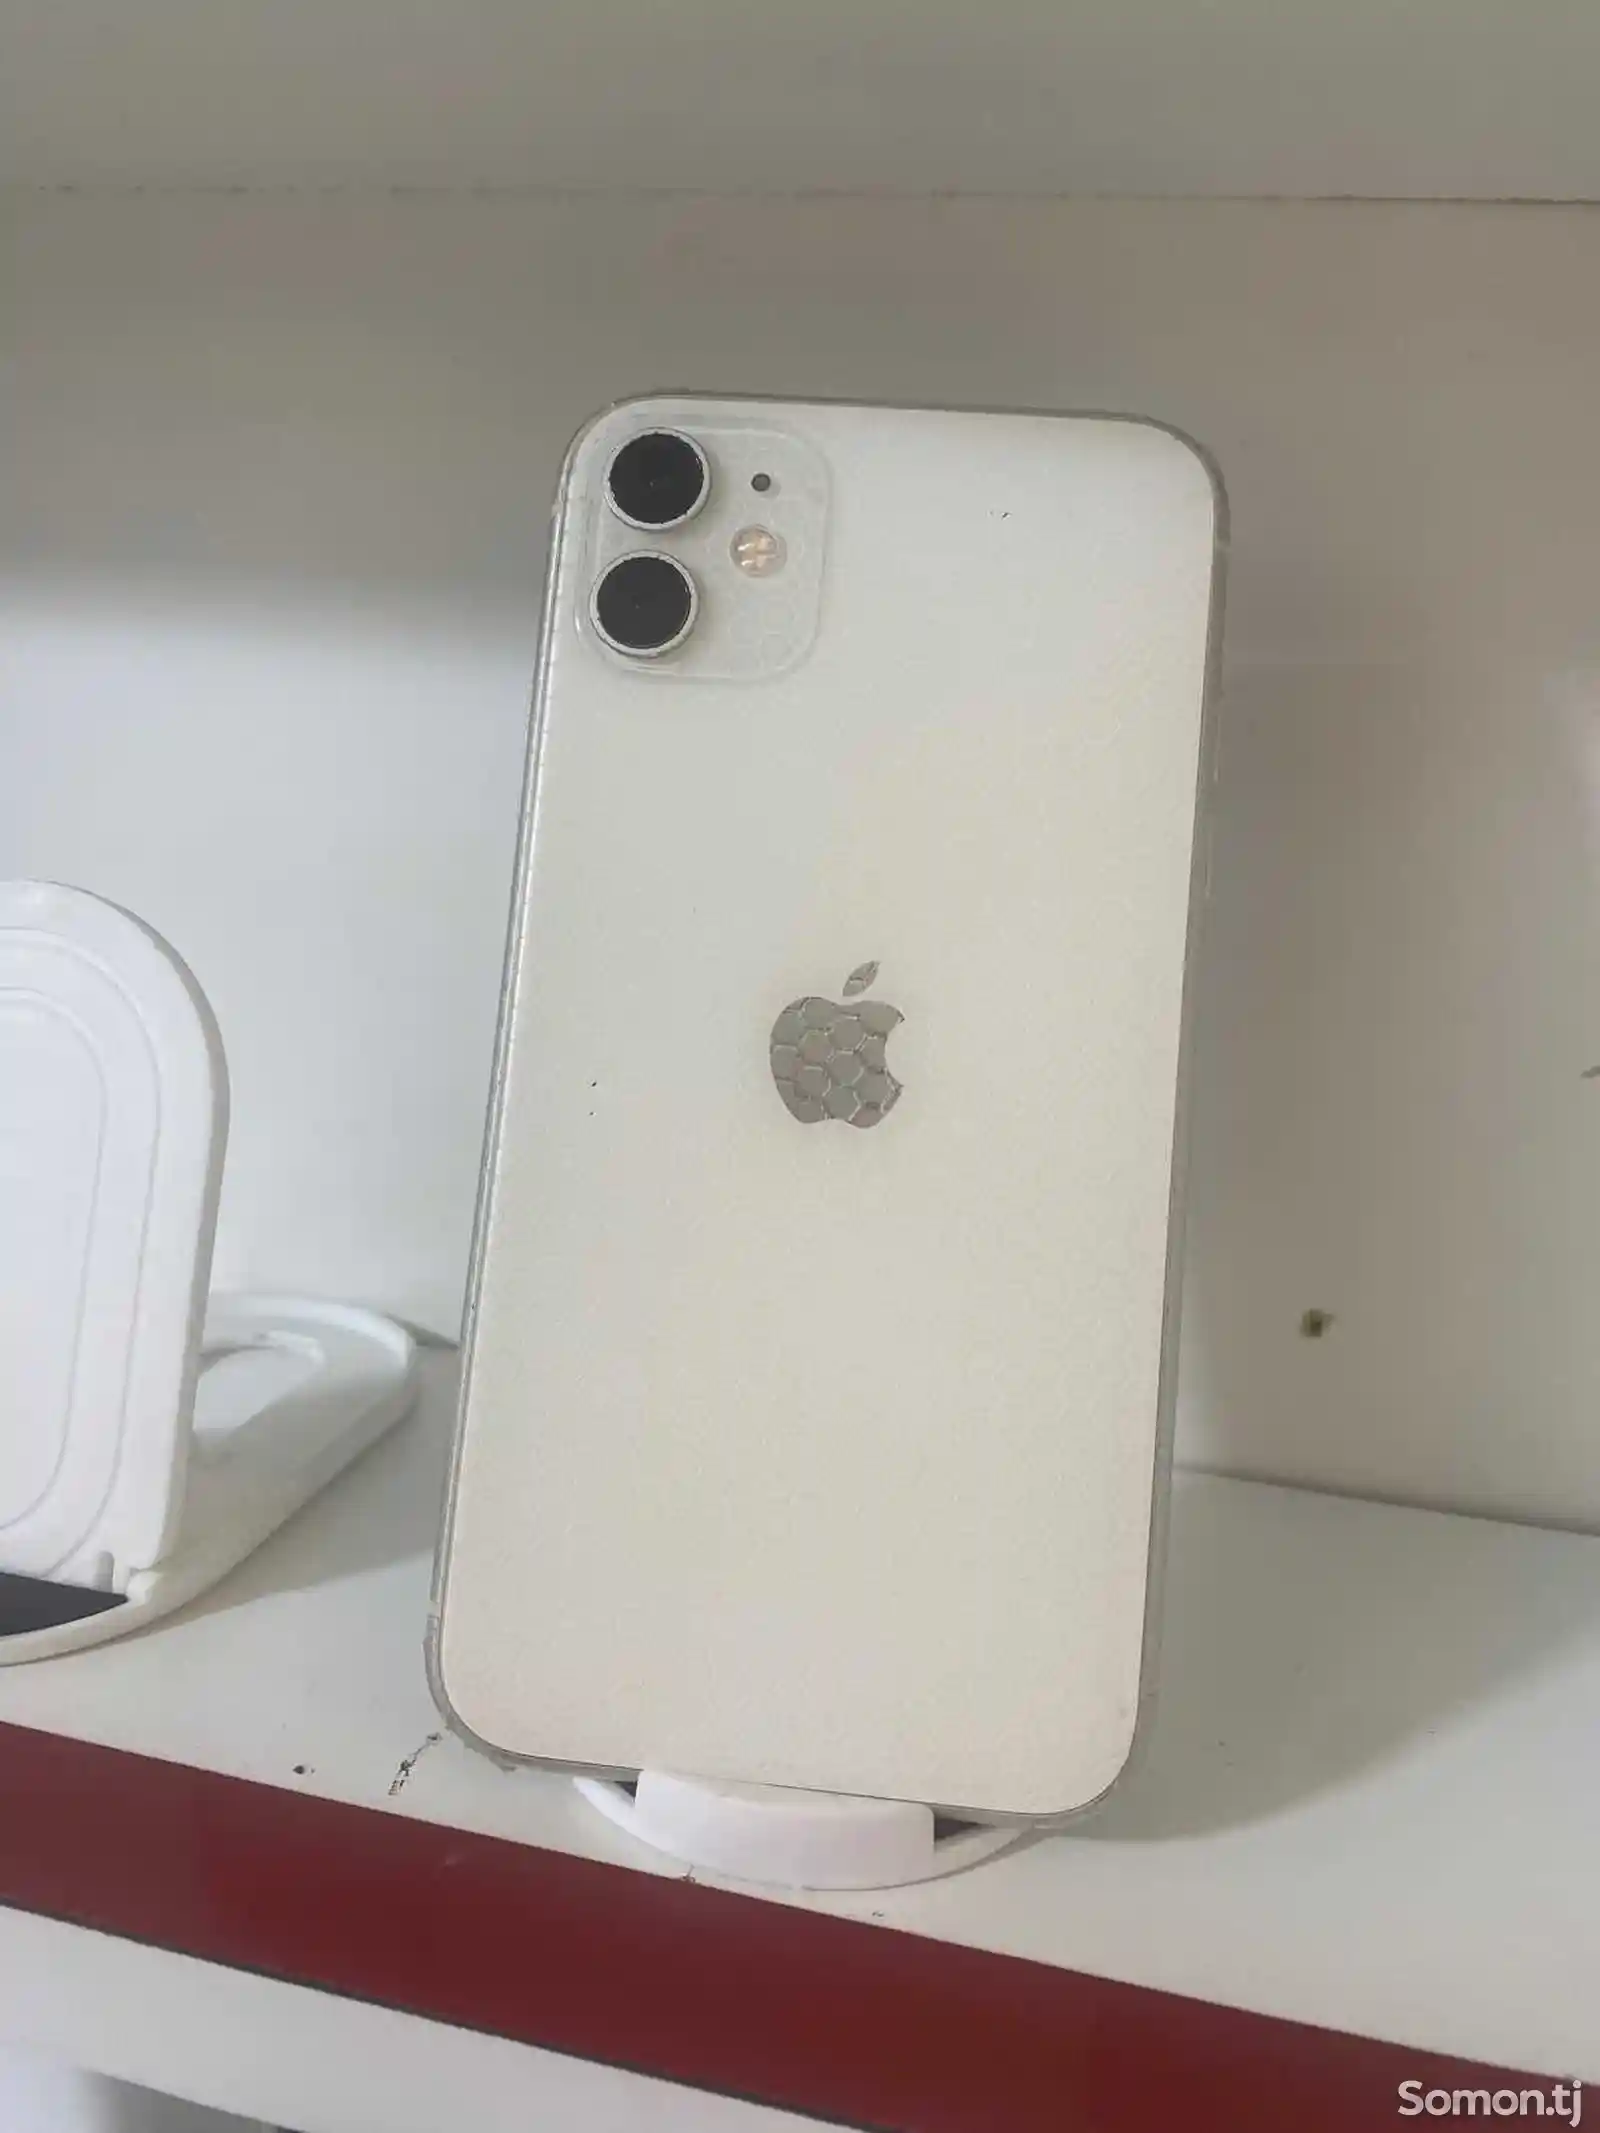 Apple iPhone 11, 64 gb, White-1